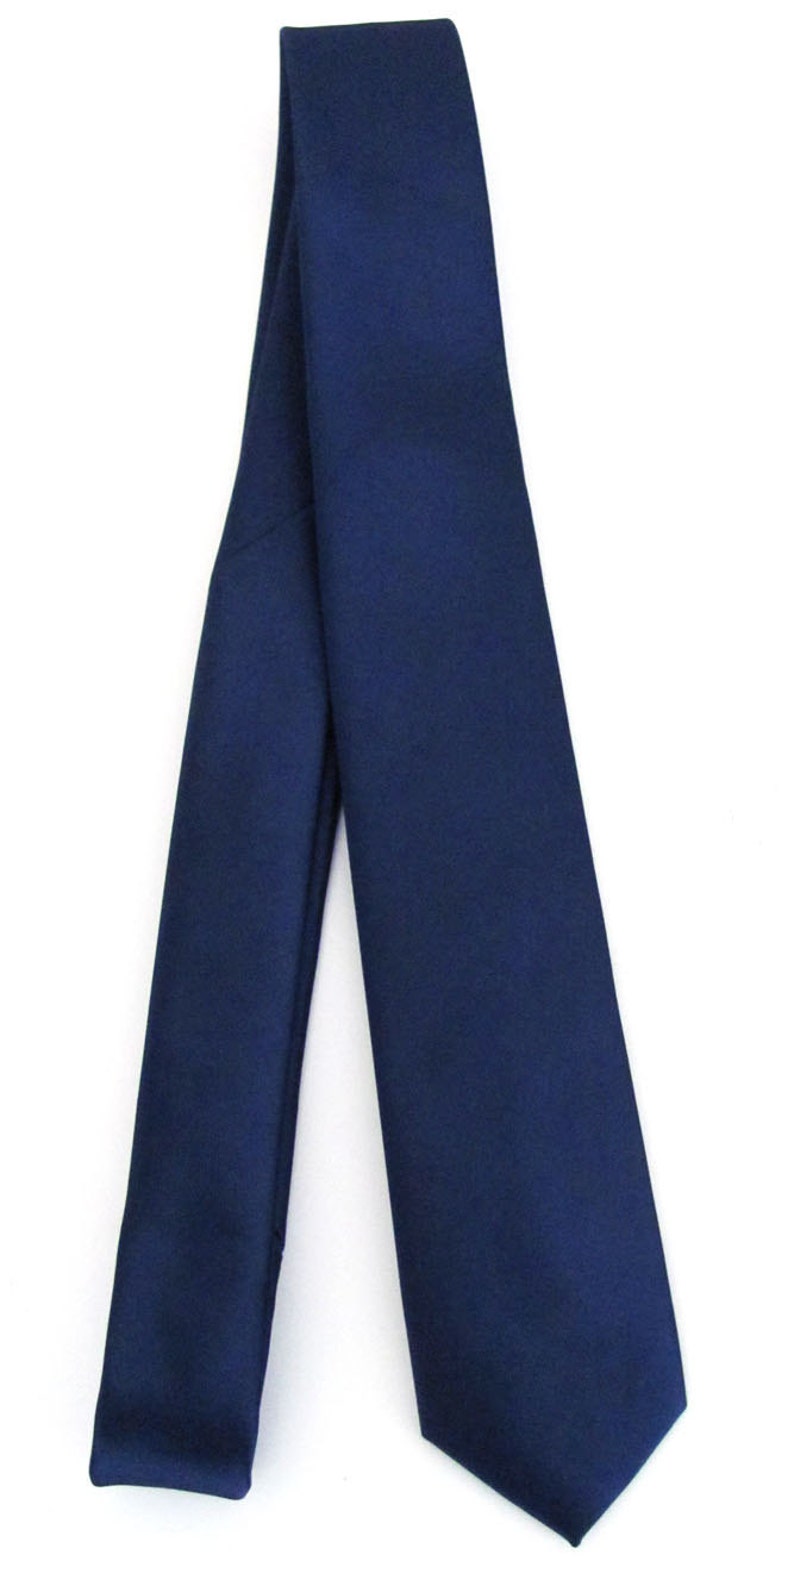 Mens Tie. Dark Navy Blue Skinny Silk Necktie with Matching Pocket Square Handkerchief Option image 3